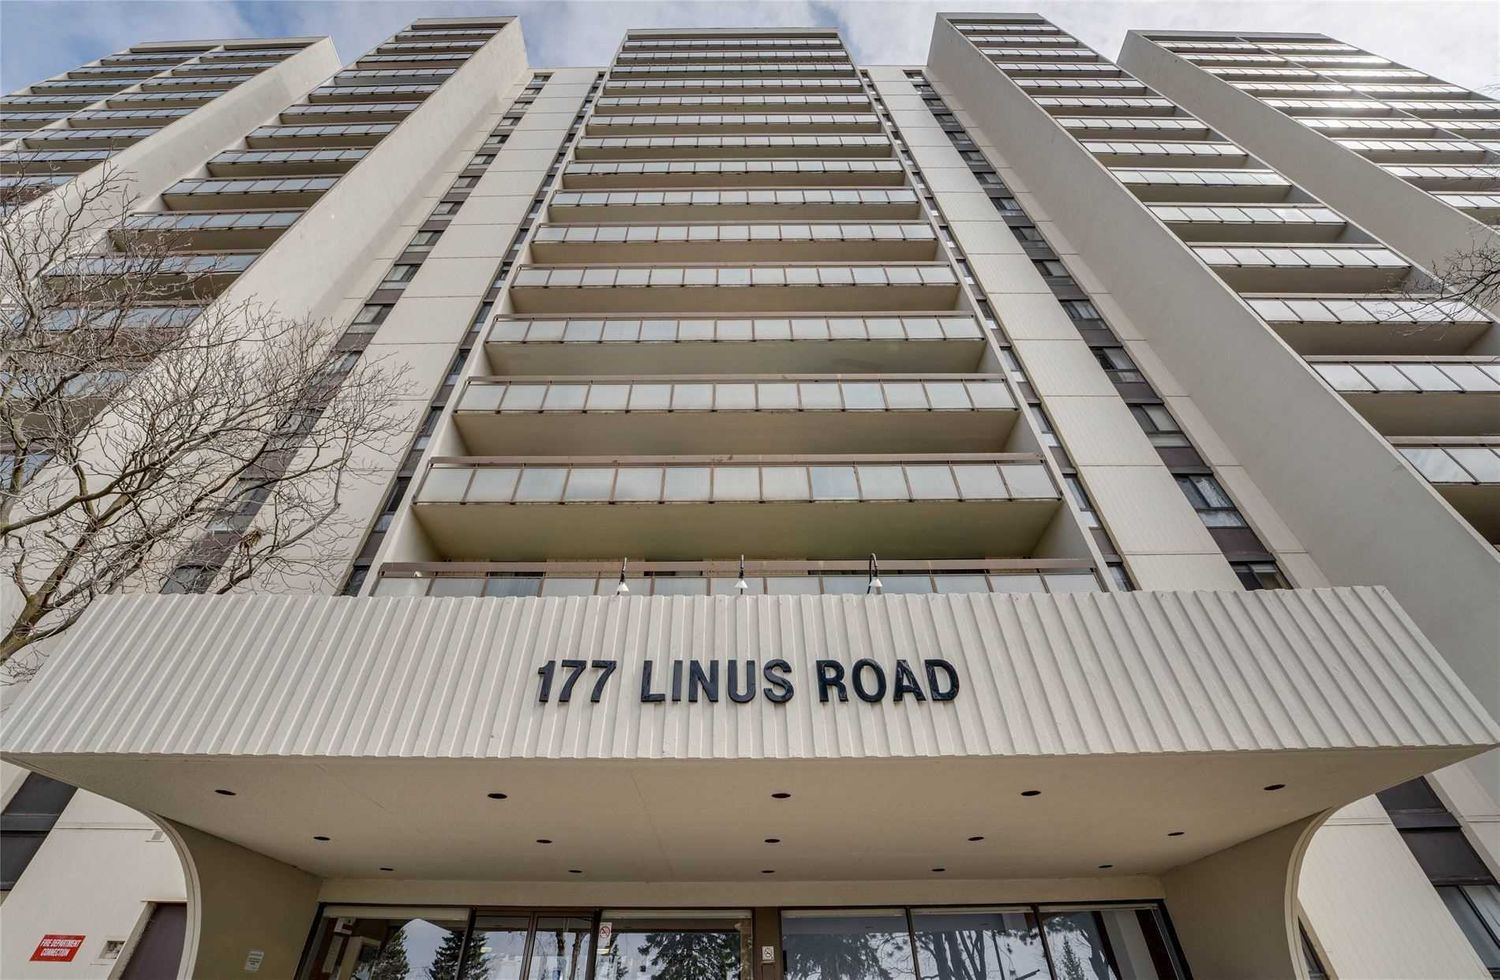 177 Linus Road. 260-350 Seneca Hill Drive Condos is located in  North York, Toronto - image #2 of 2